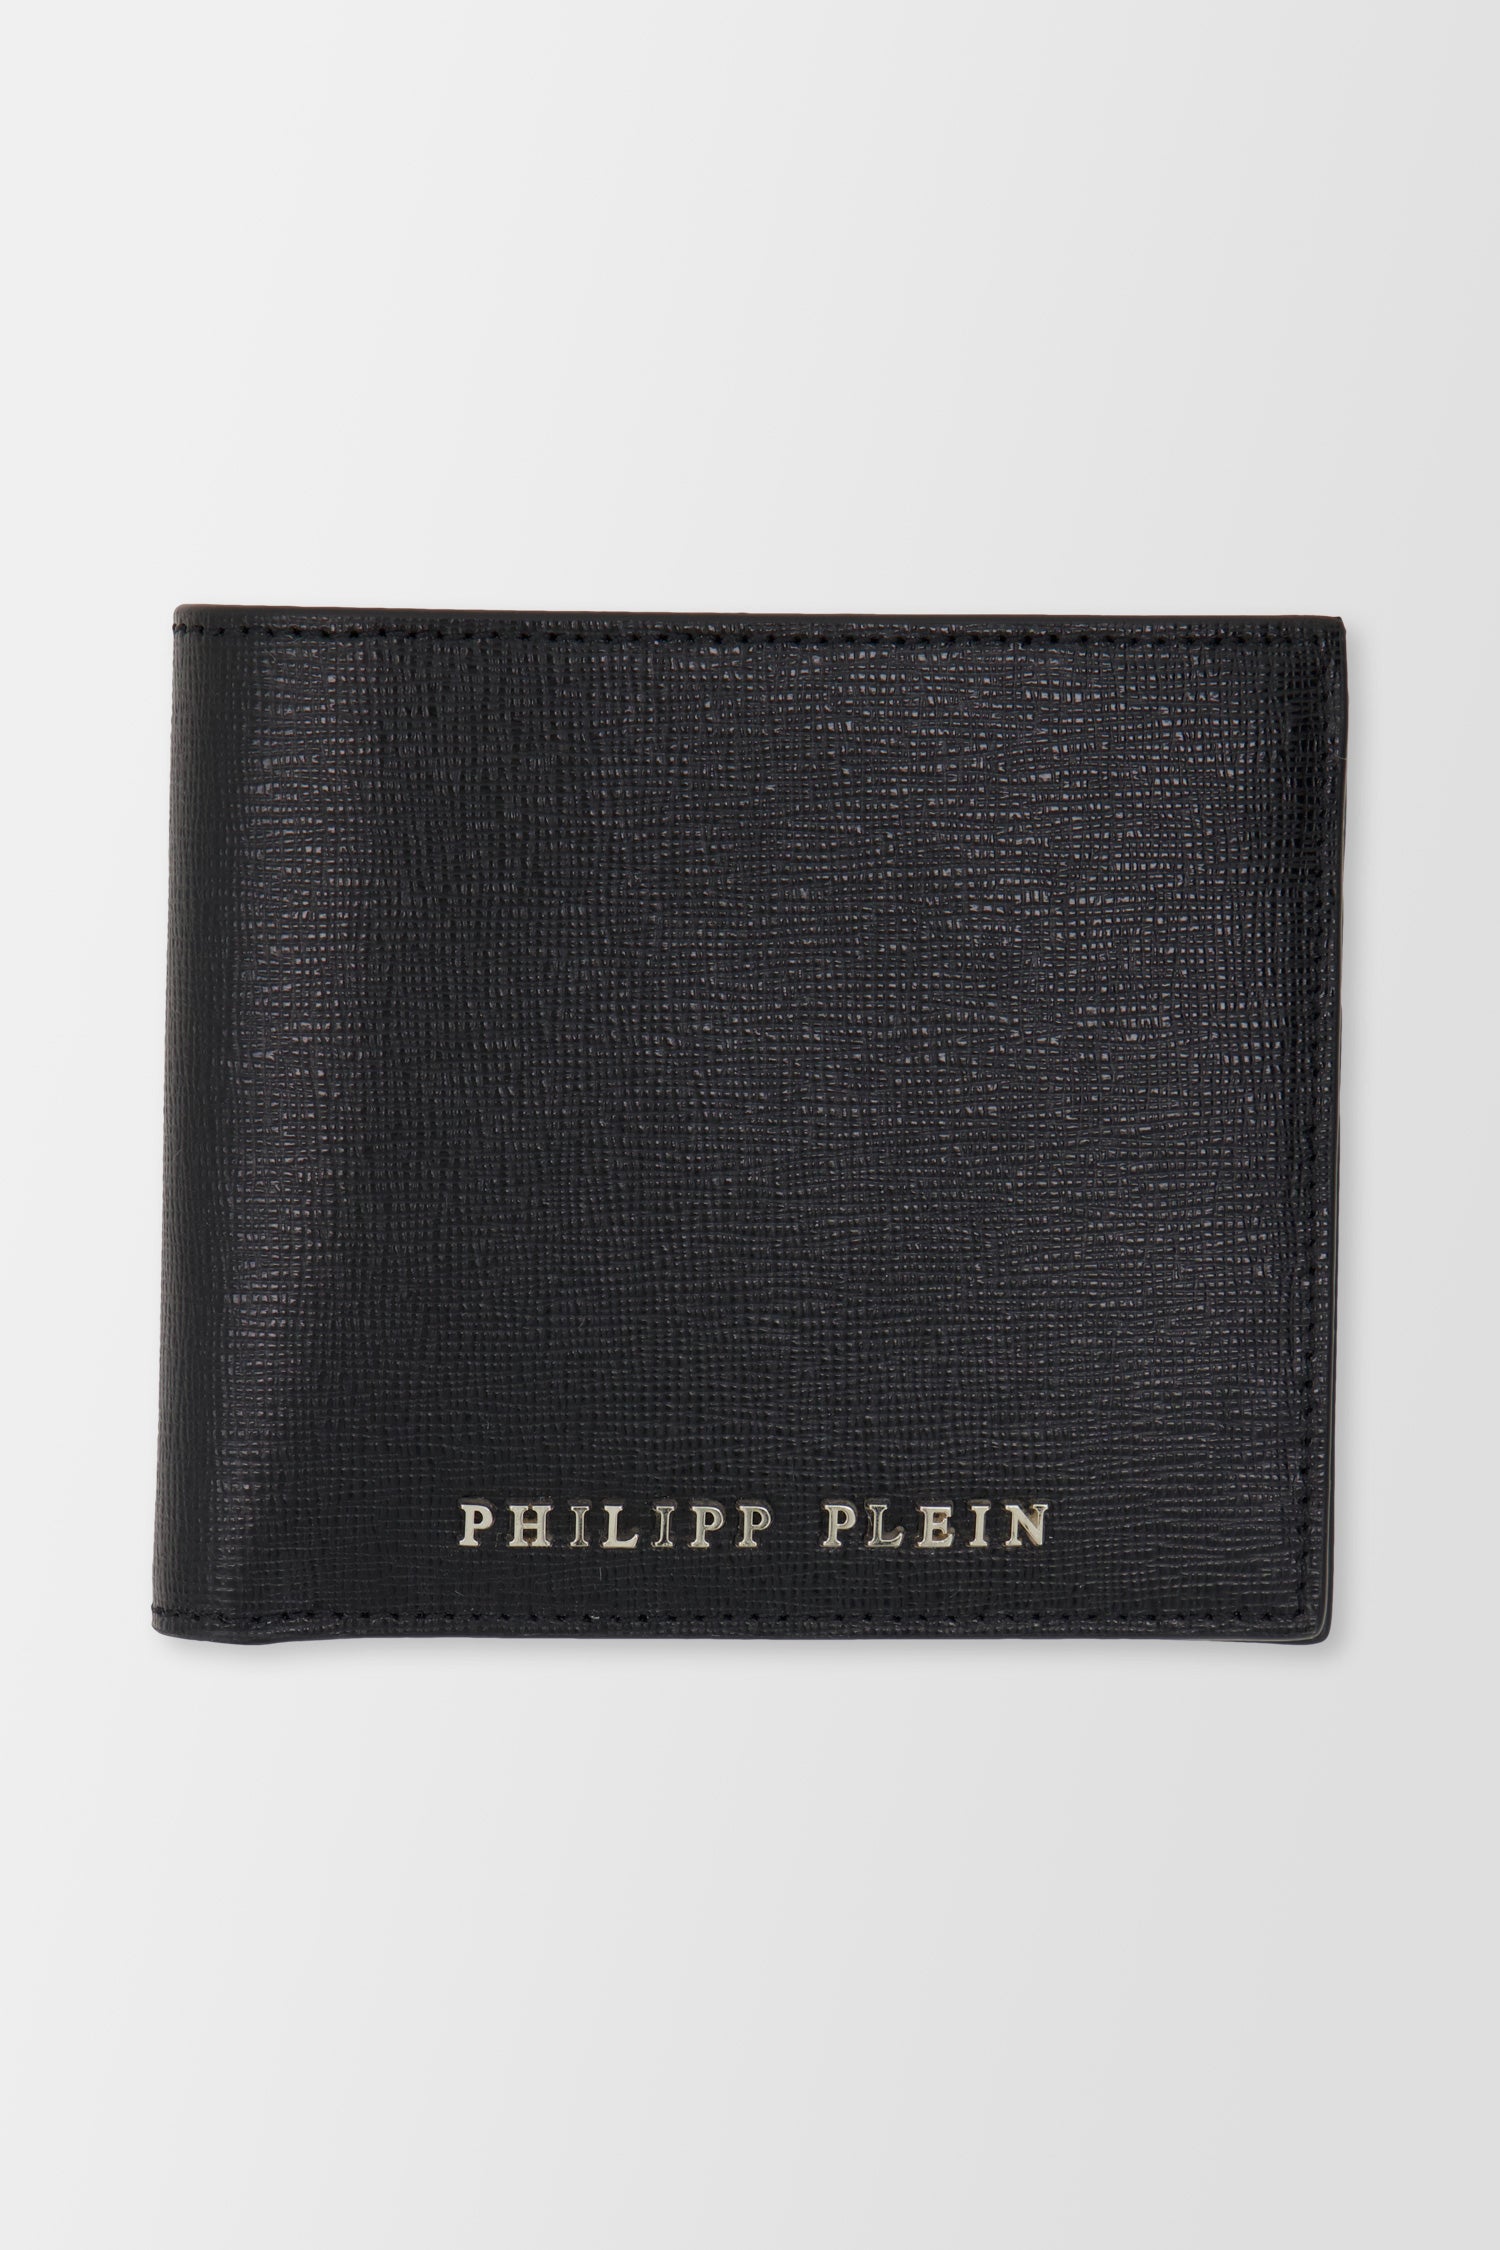 Philipp Plein TM French Wallet